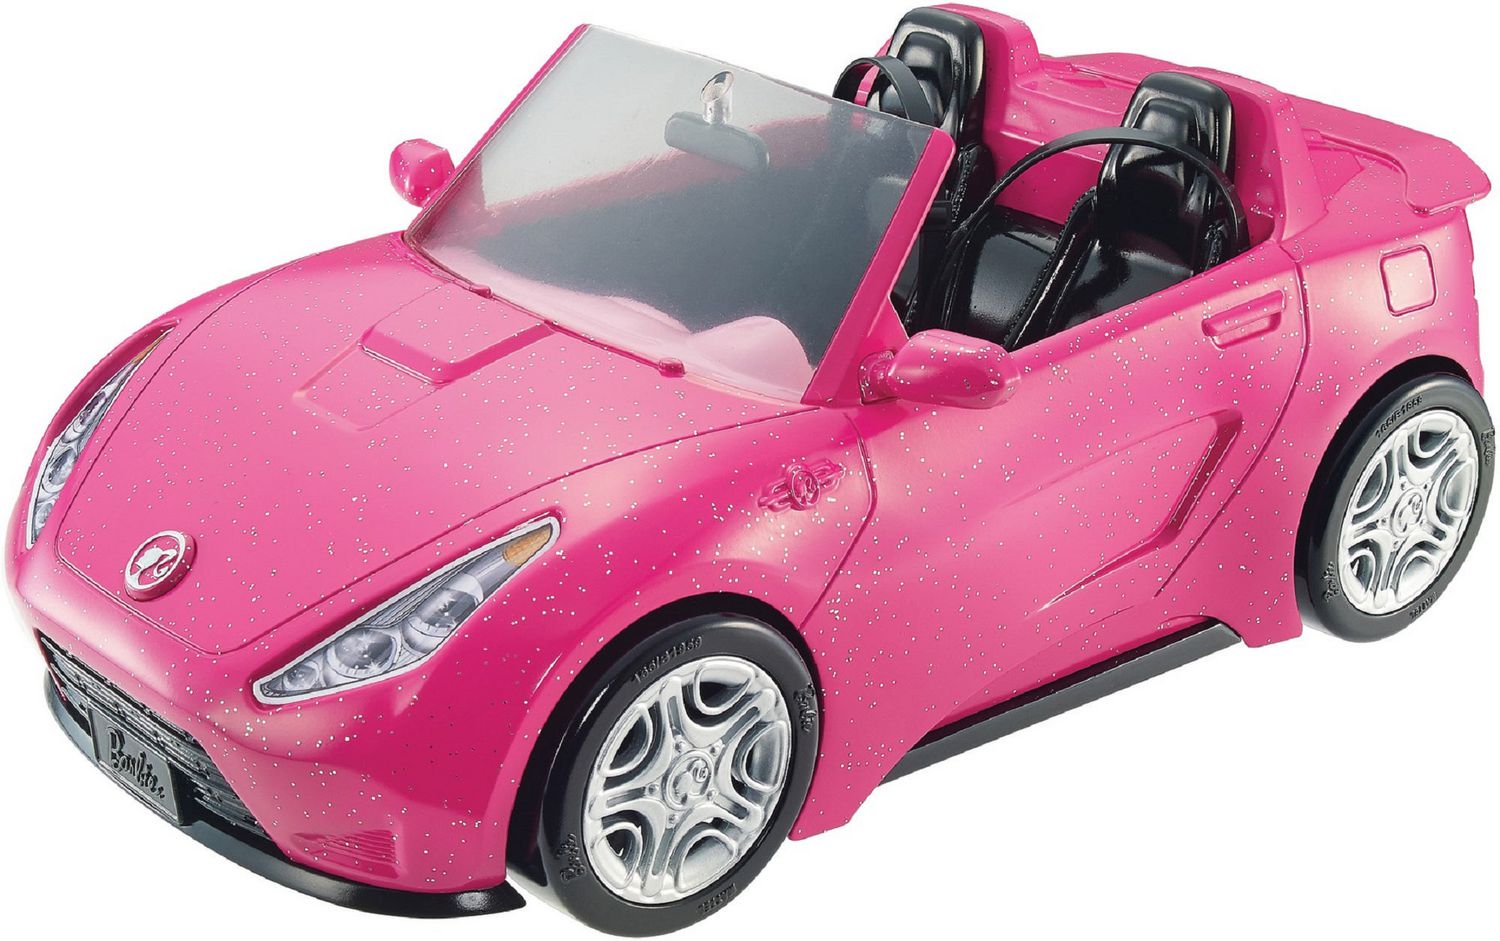 barbie in convertible